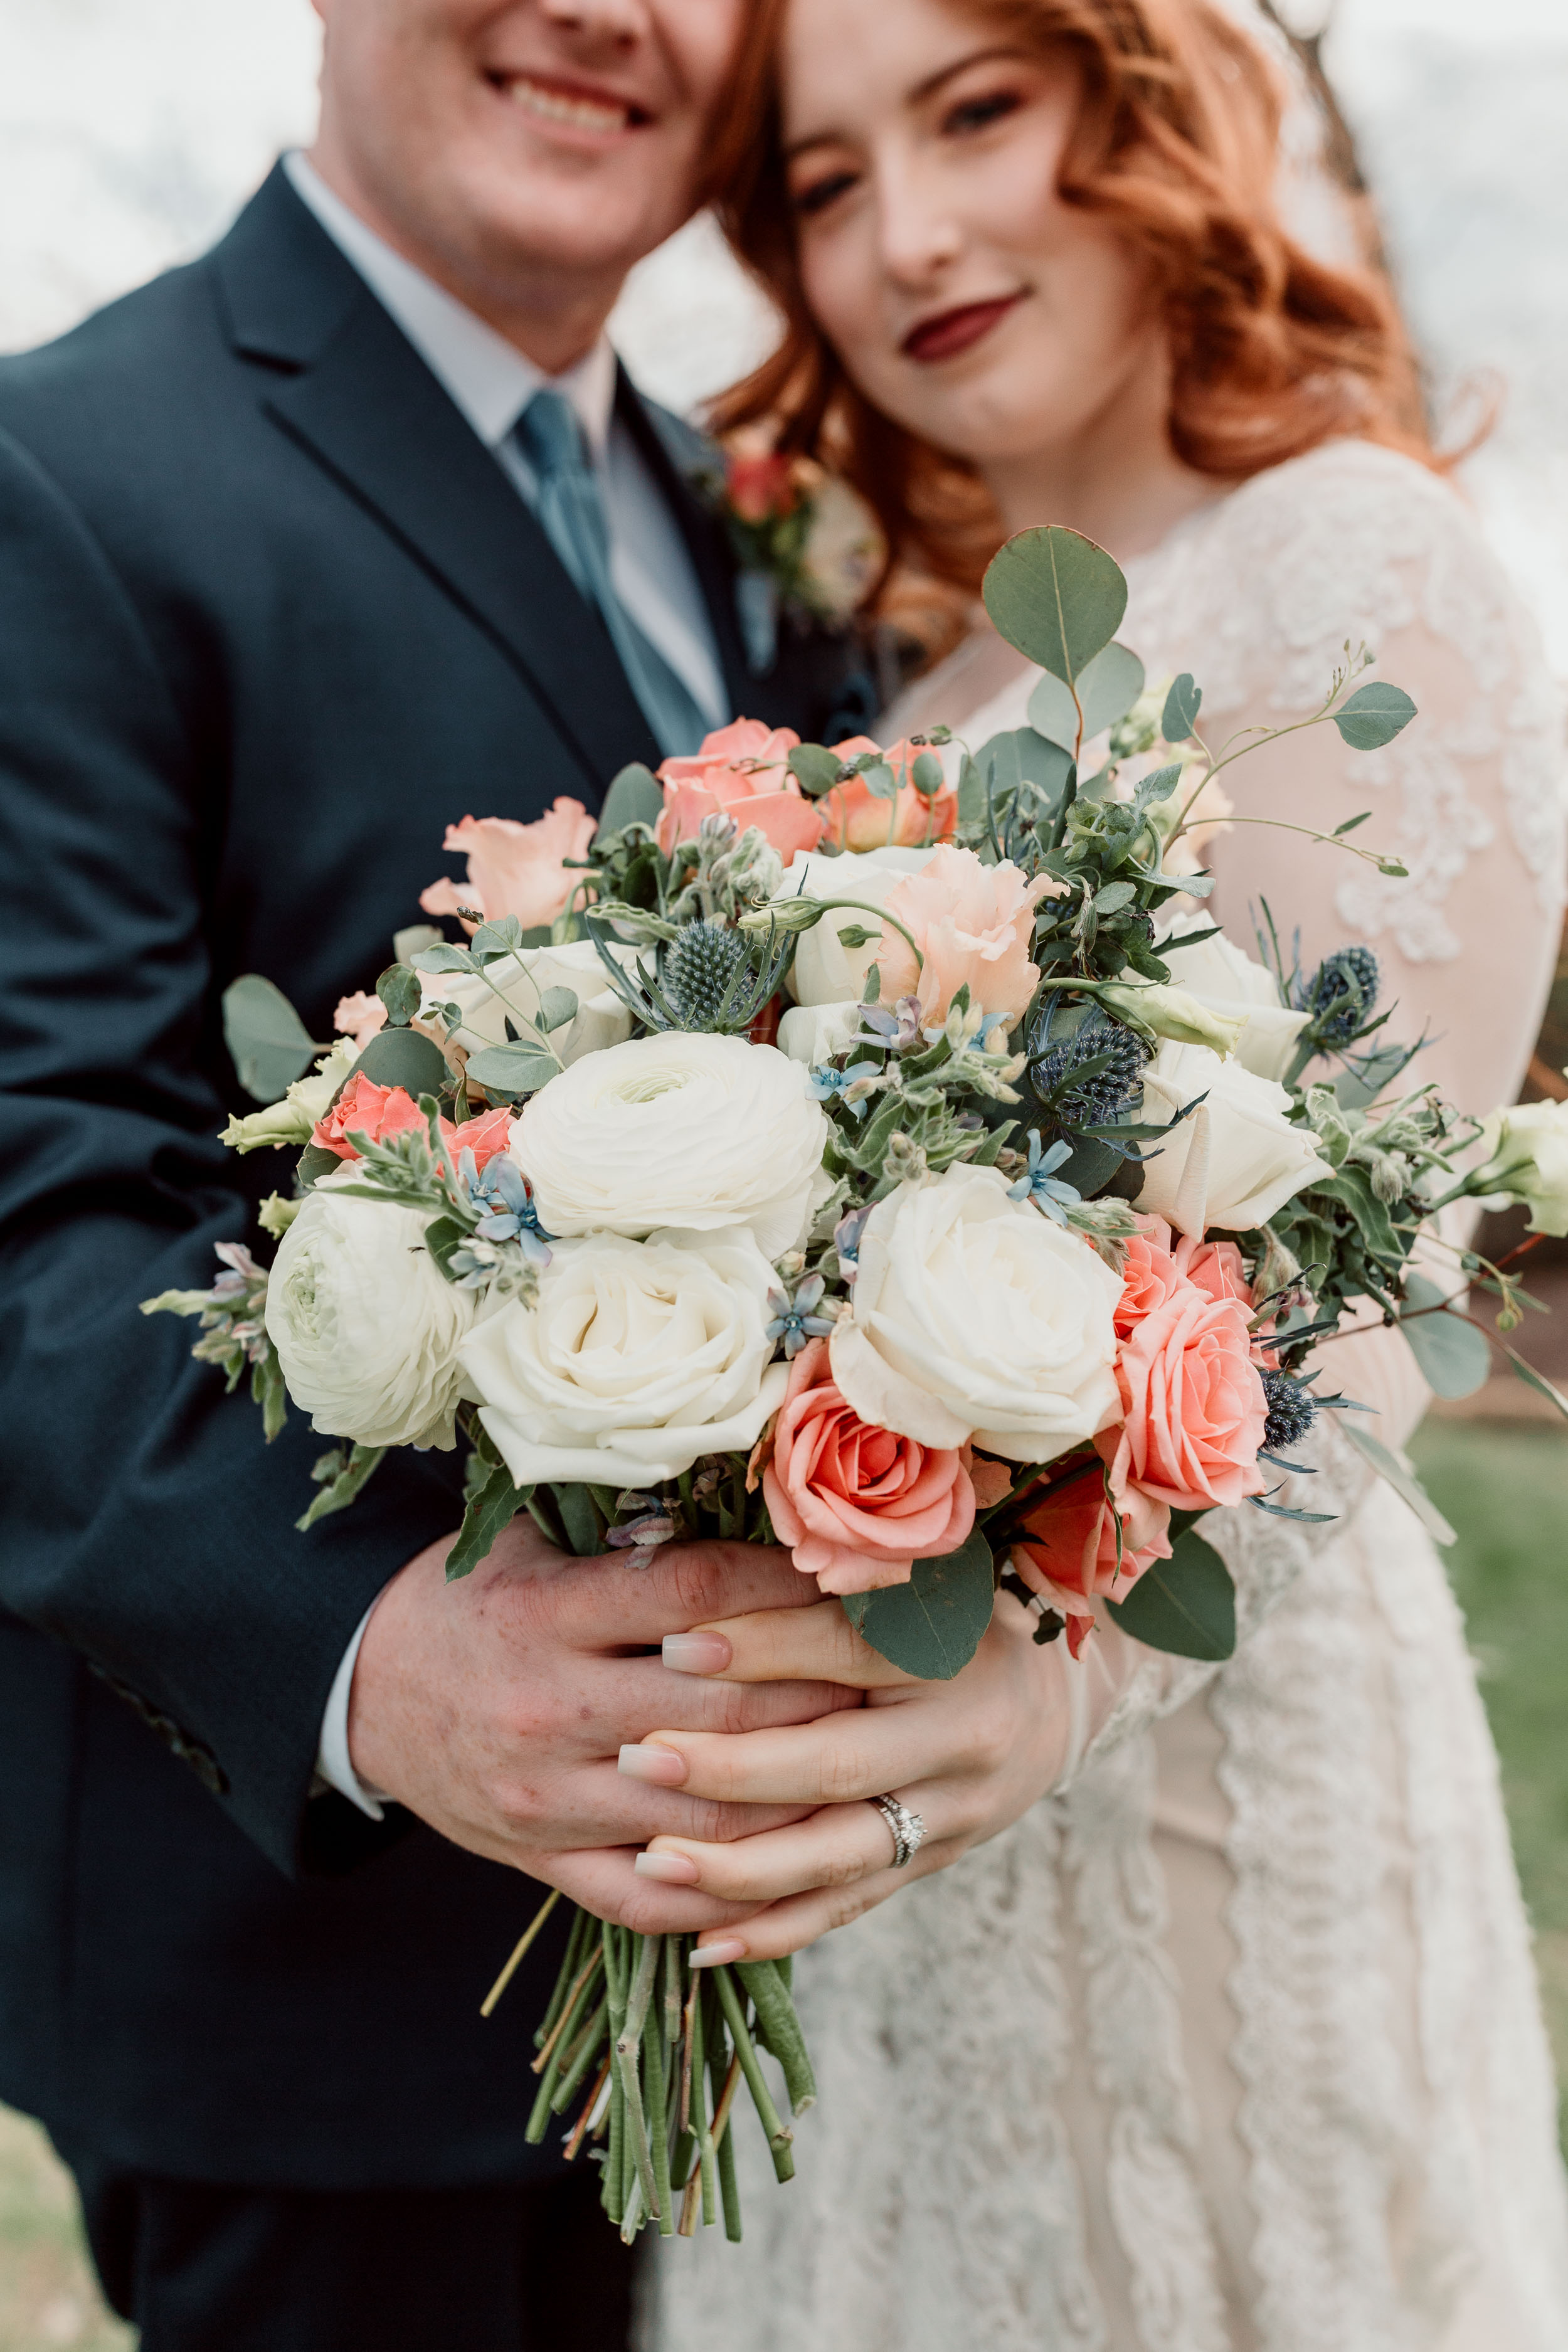 Bridal bouquet with white and orange flowers and eucalyptus | Galena Illinois Airbnb Wedding | Wedding Photographer | Eagle Ridge Galena Wedding | Outdoor Wedding Inspiration | Small Intimate Elopement Wedding